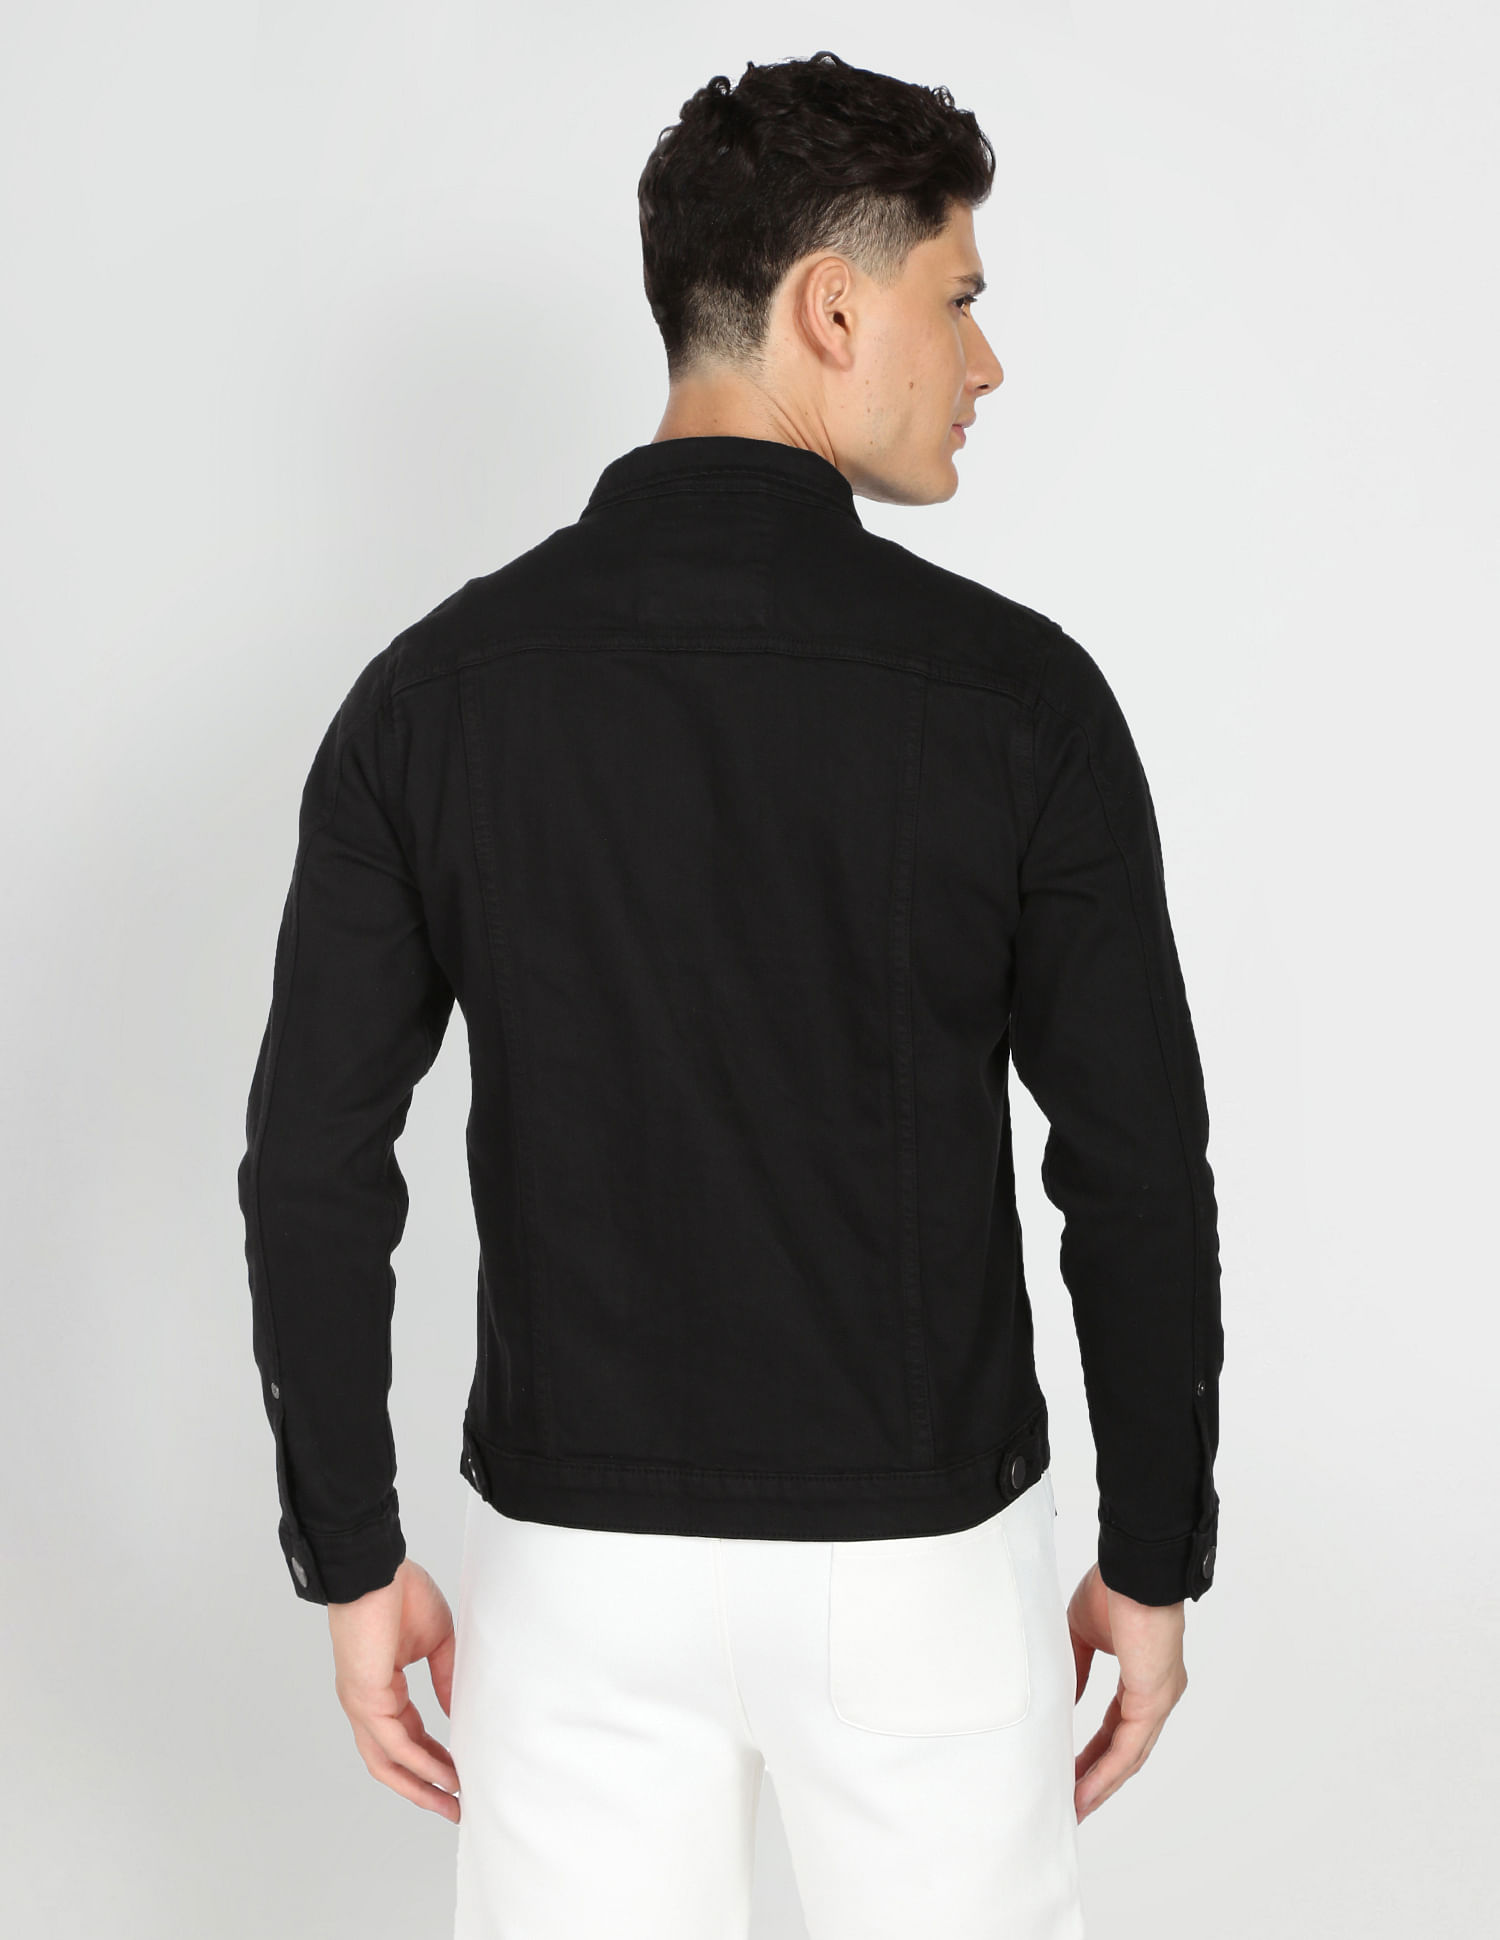 KaLI_store Denim Jacket Men Men's Casual Button Front Long Sleeve Solid  Denim Jacket with Pocket Black,XXL - Walmart.com